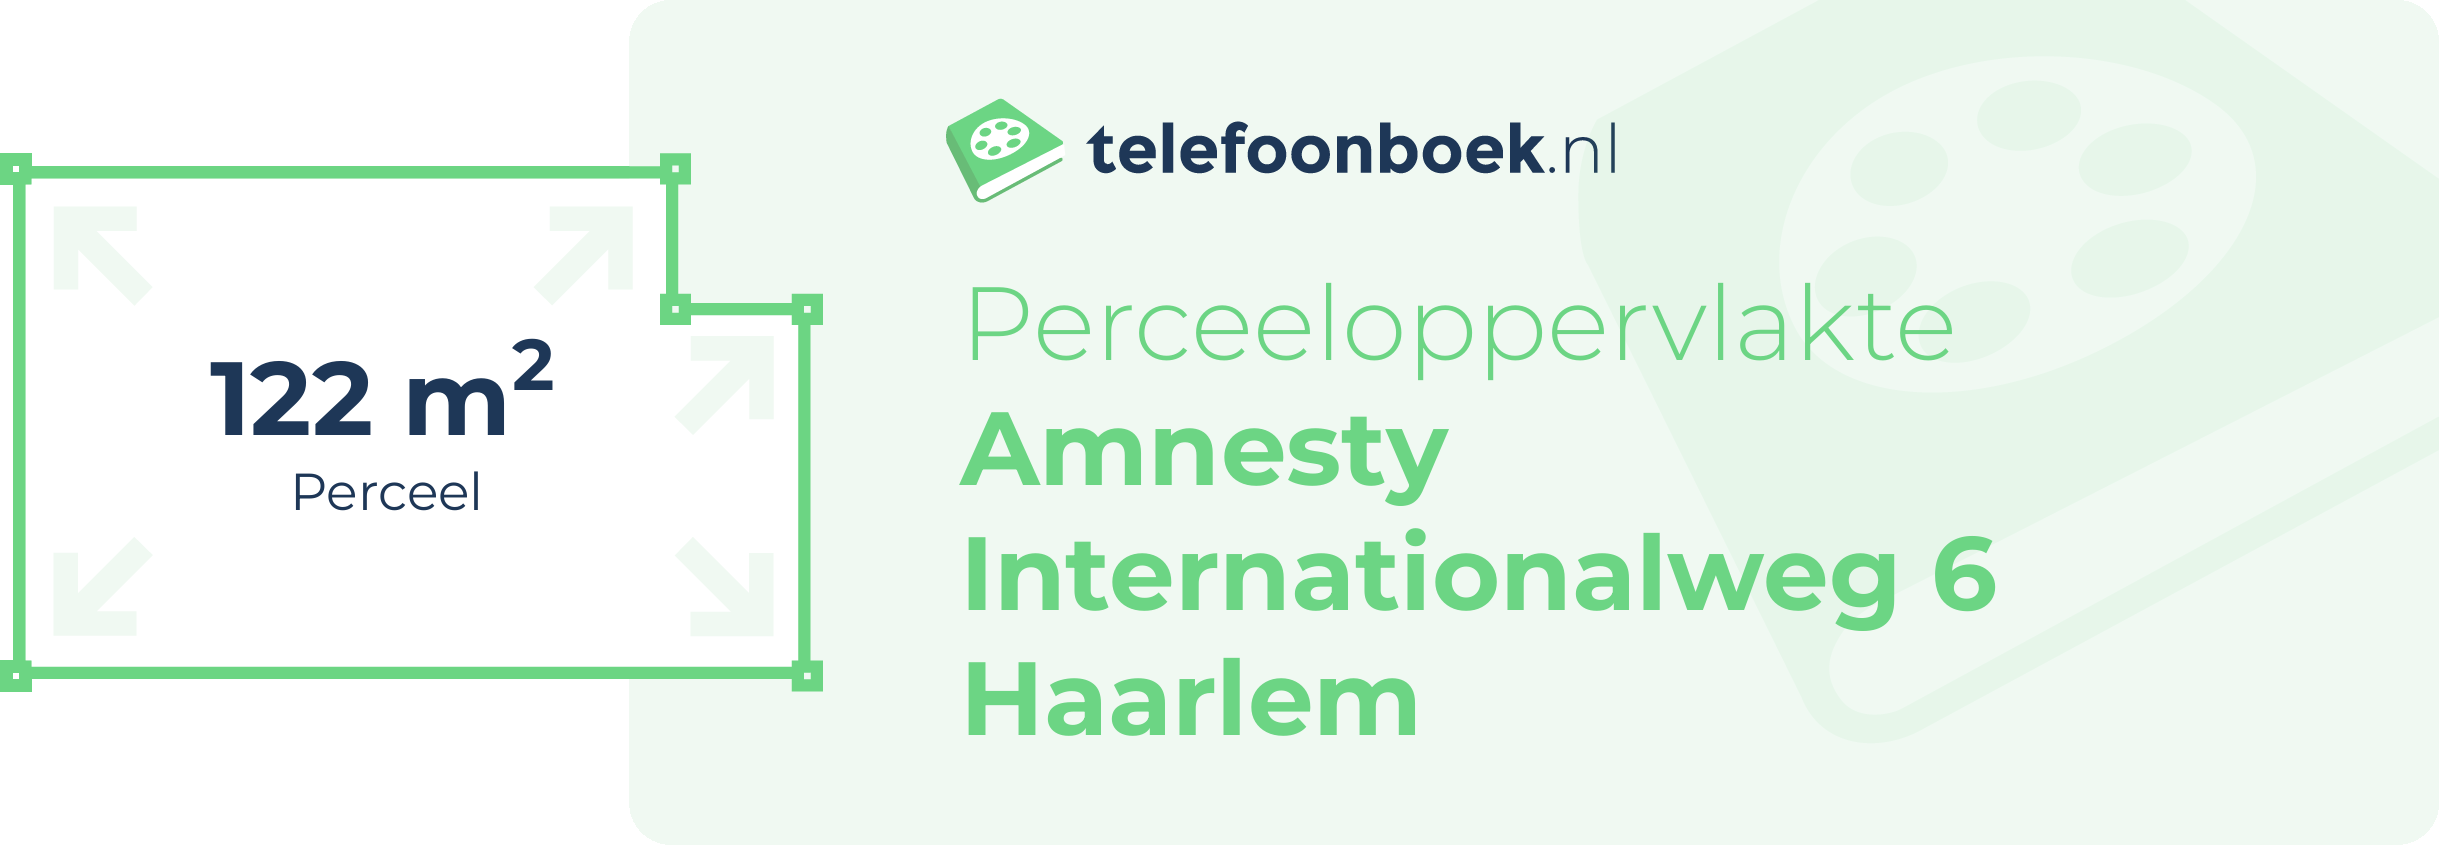 Perceeloppervlakte Amnesty Internationalweg 6 Haarlem